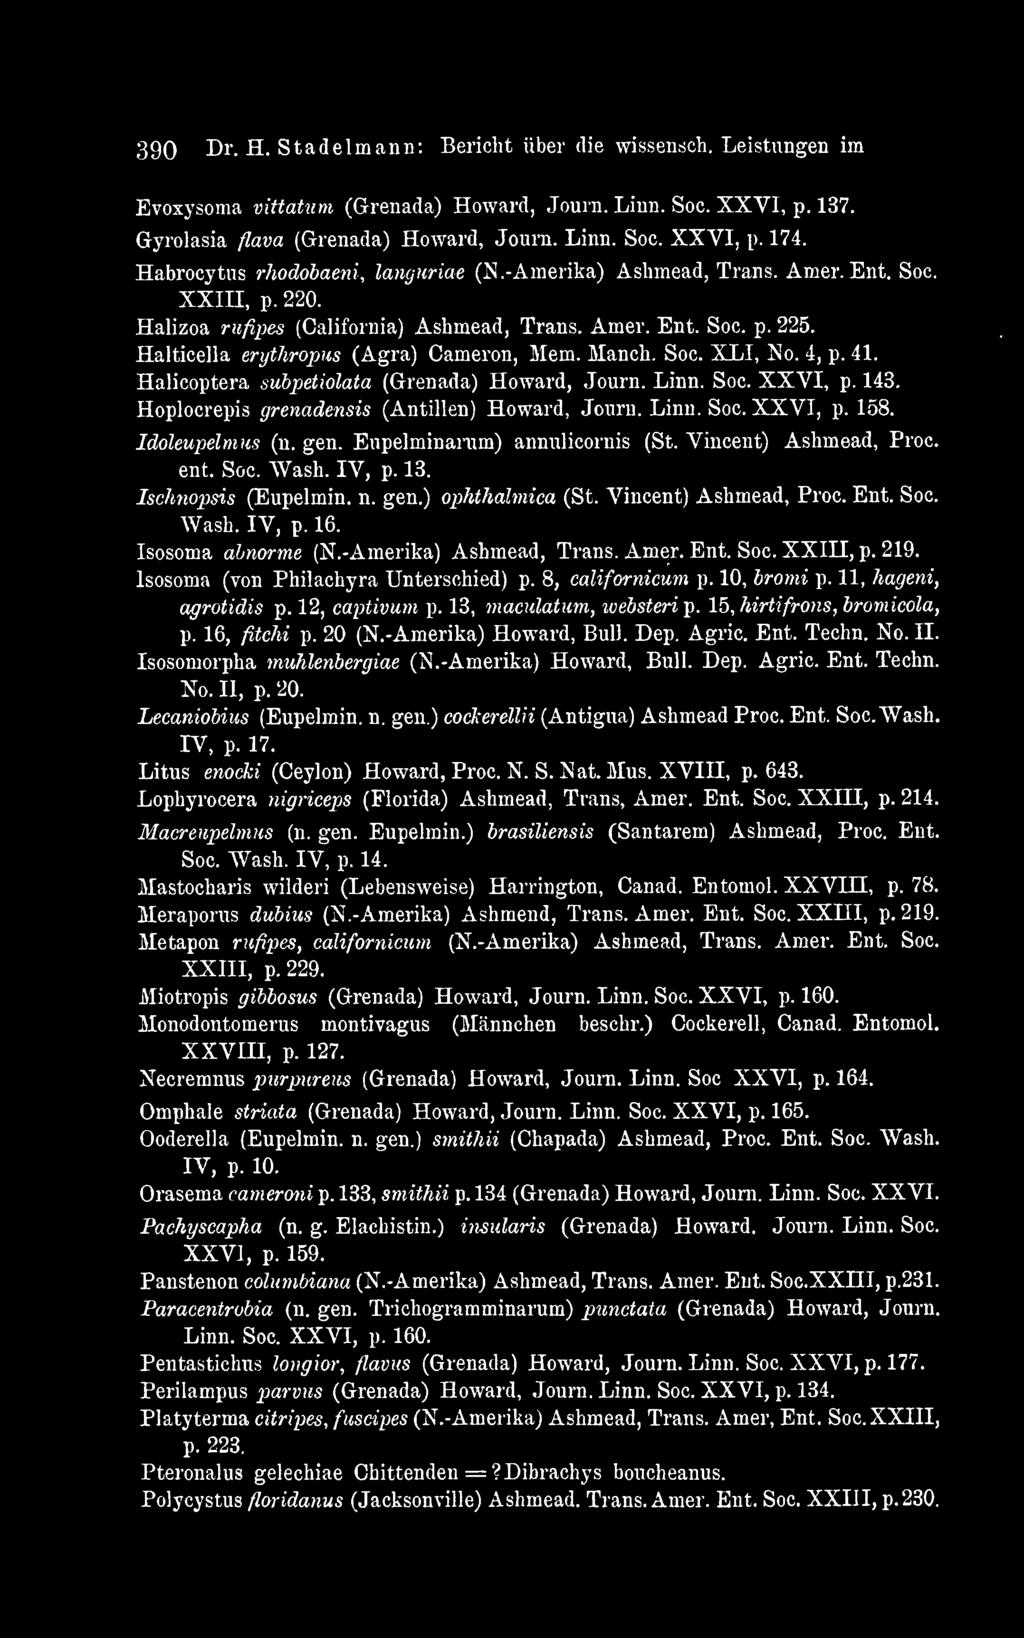 Halticeila erythropus (Agra) Cameron, Mem. Manch. Soc. XLI, No. 4, p. 41. Halicoptera subpetiolata (Grenada) Howard, Journ. Linn. Soc. XXVI, p. 143. Hoplocrepis grenadensis (Antillen) Howard, Journ.